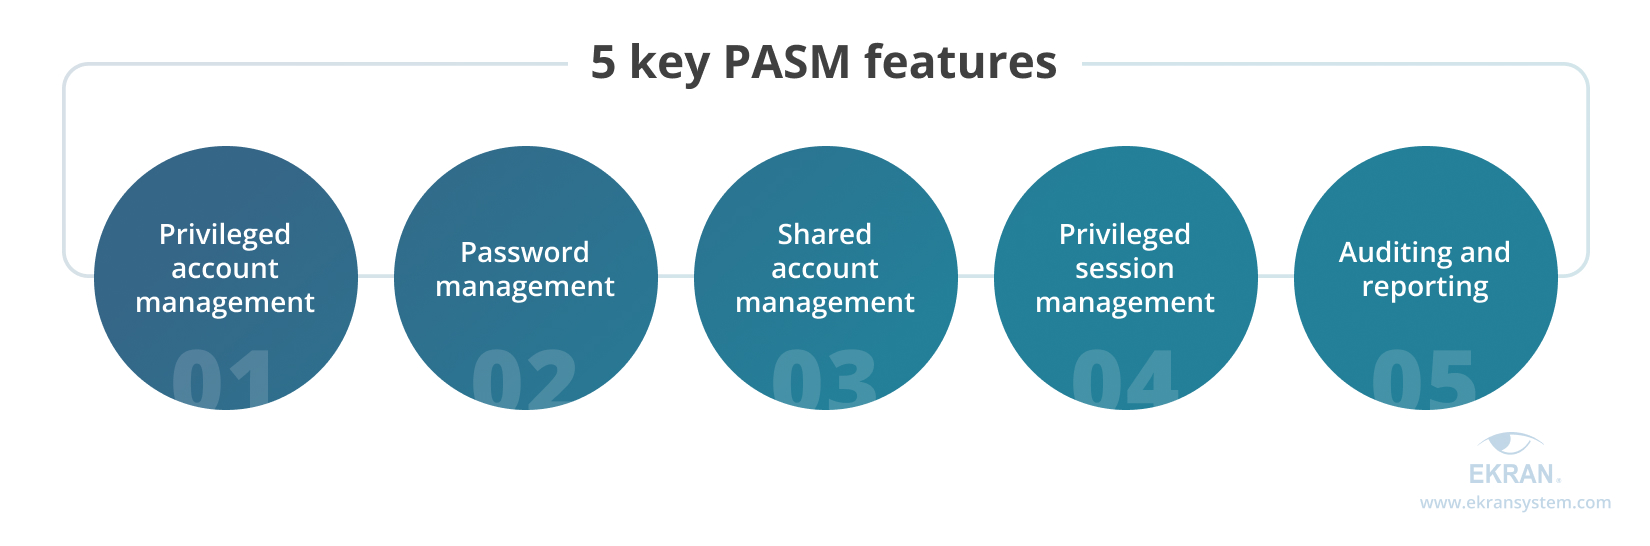 key PASM features